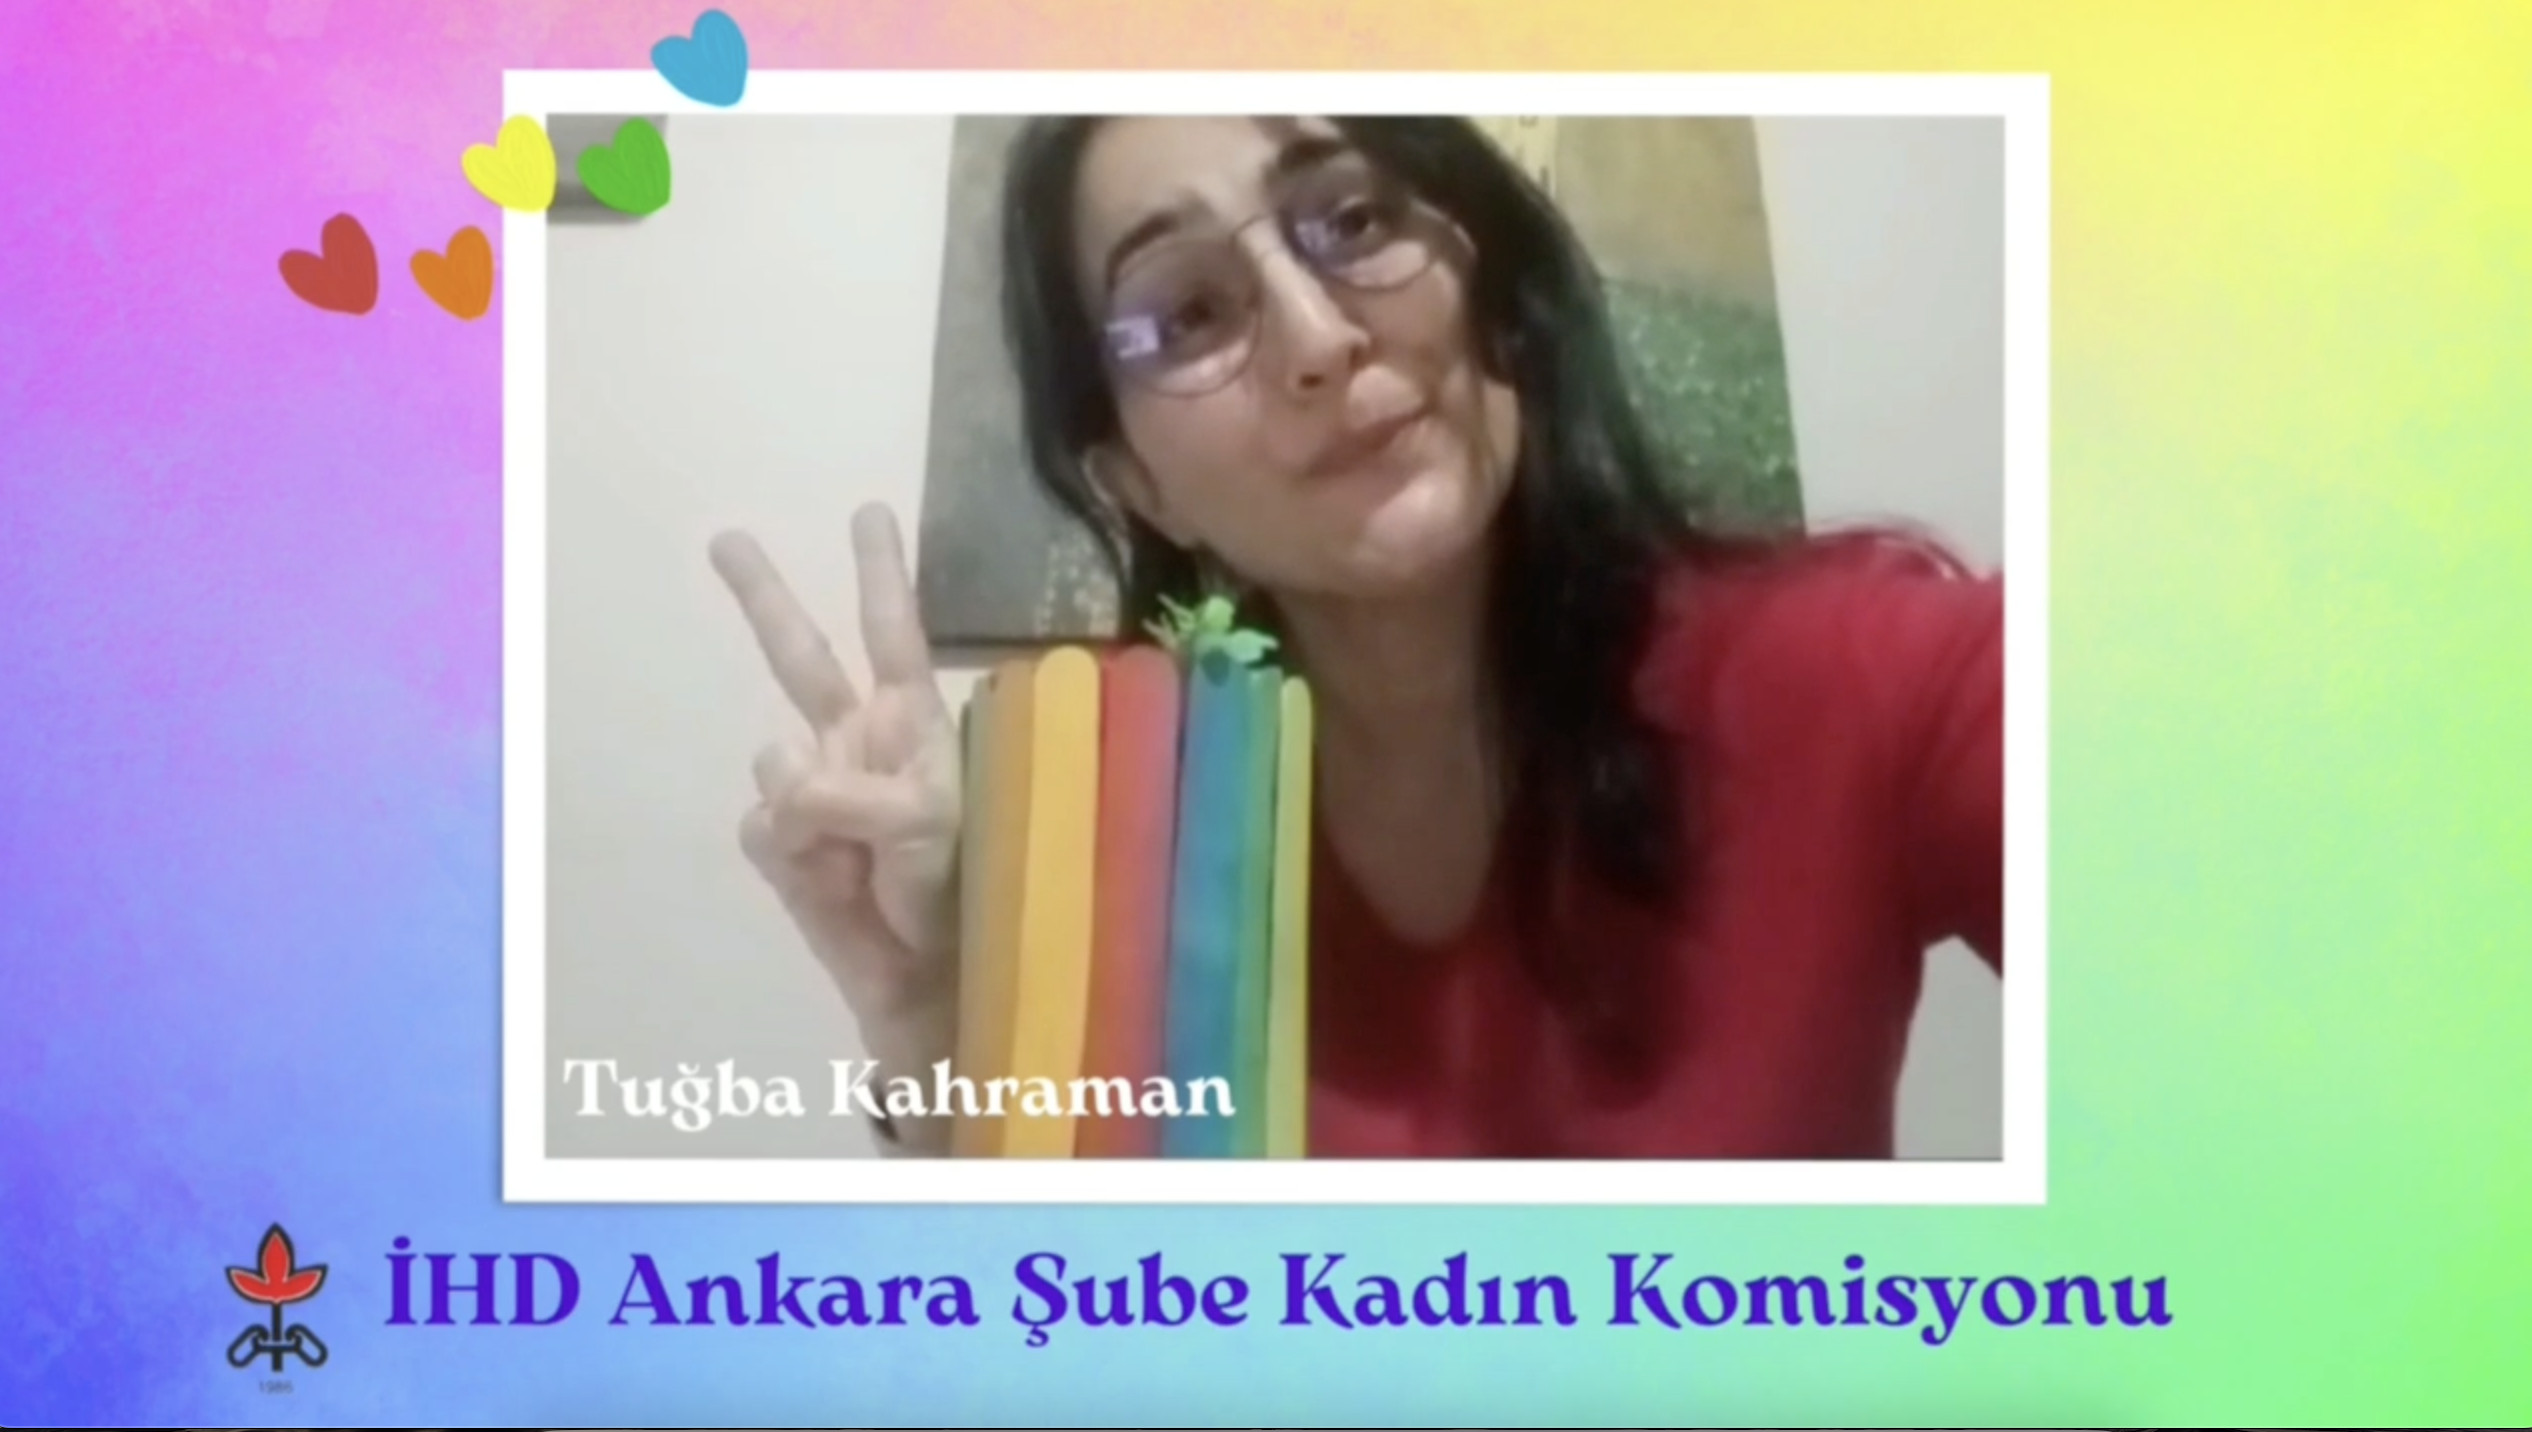 İHD Ankara Kadın Komisyonu: Aşk, özgürlüğün ta kendisidir! | Kaos GL - LGBTİ+ Haber Portalı Haber